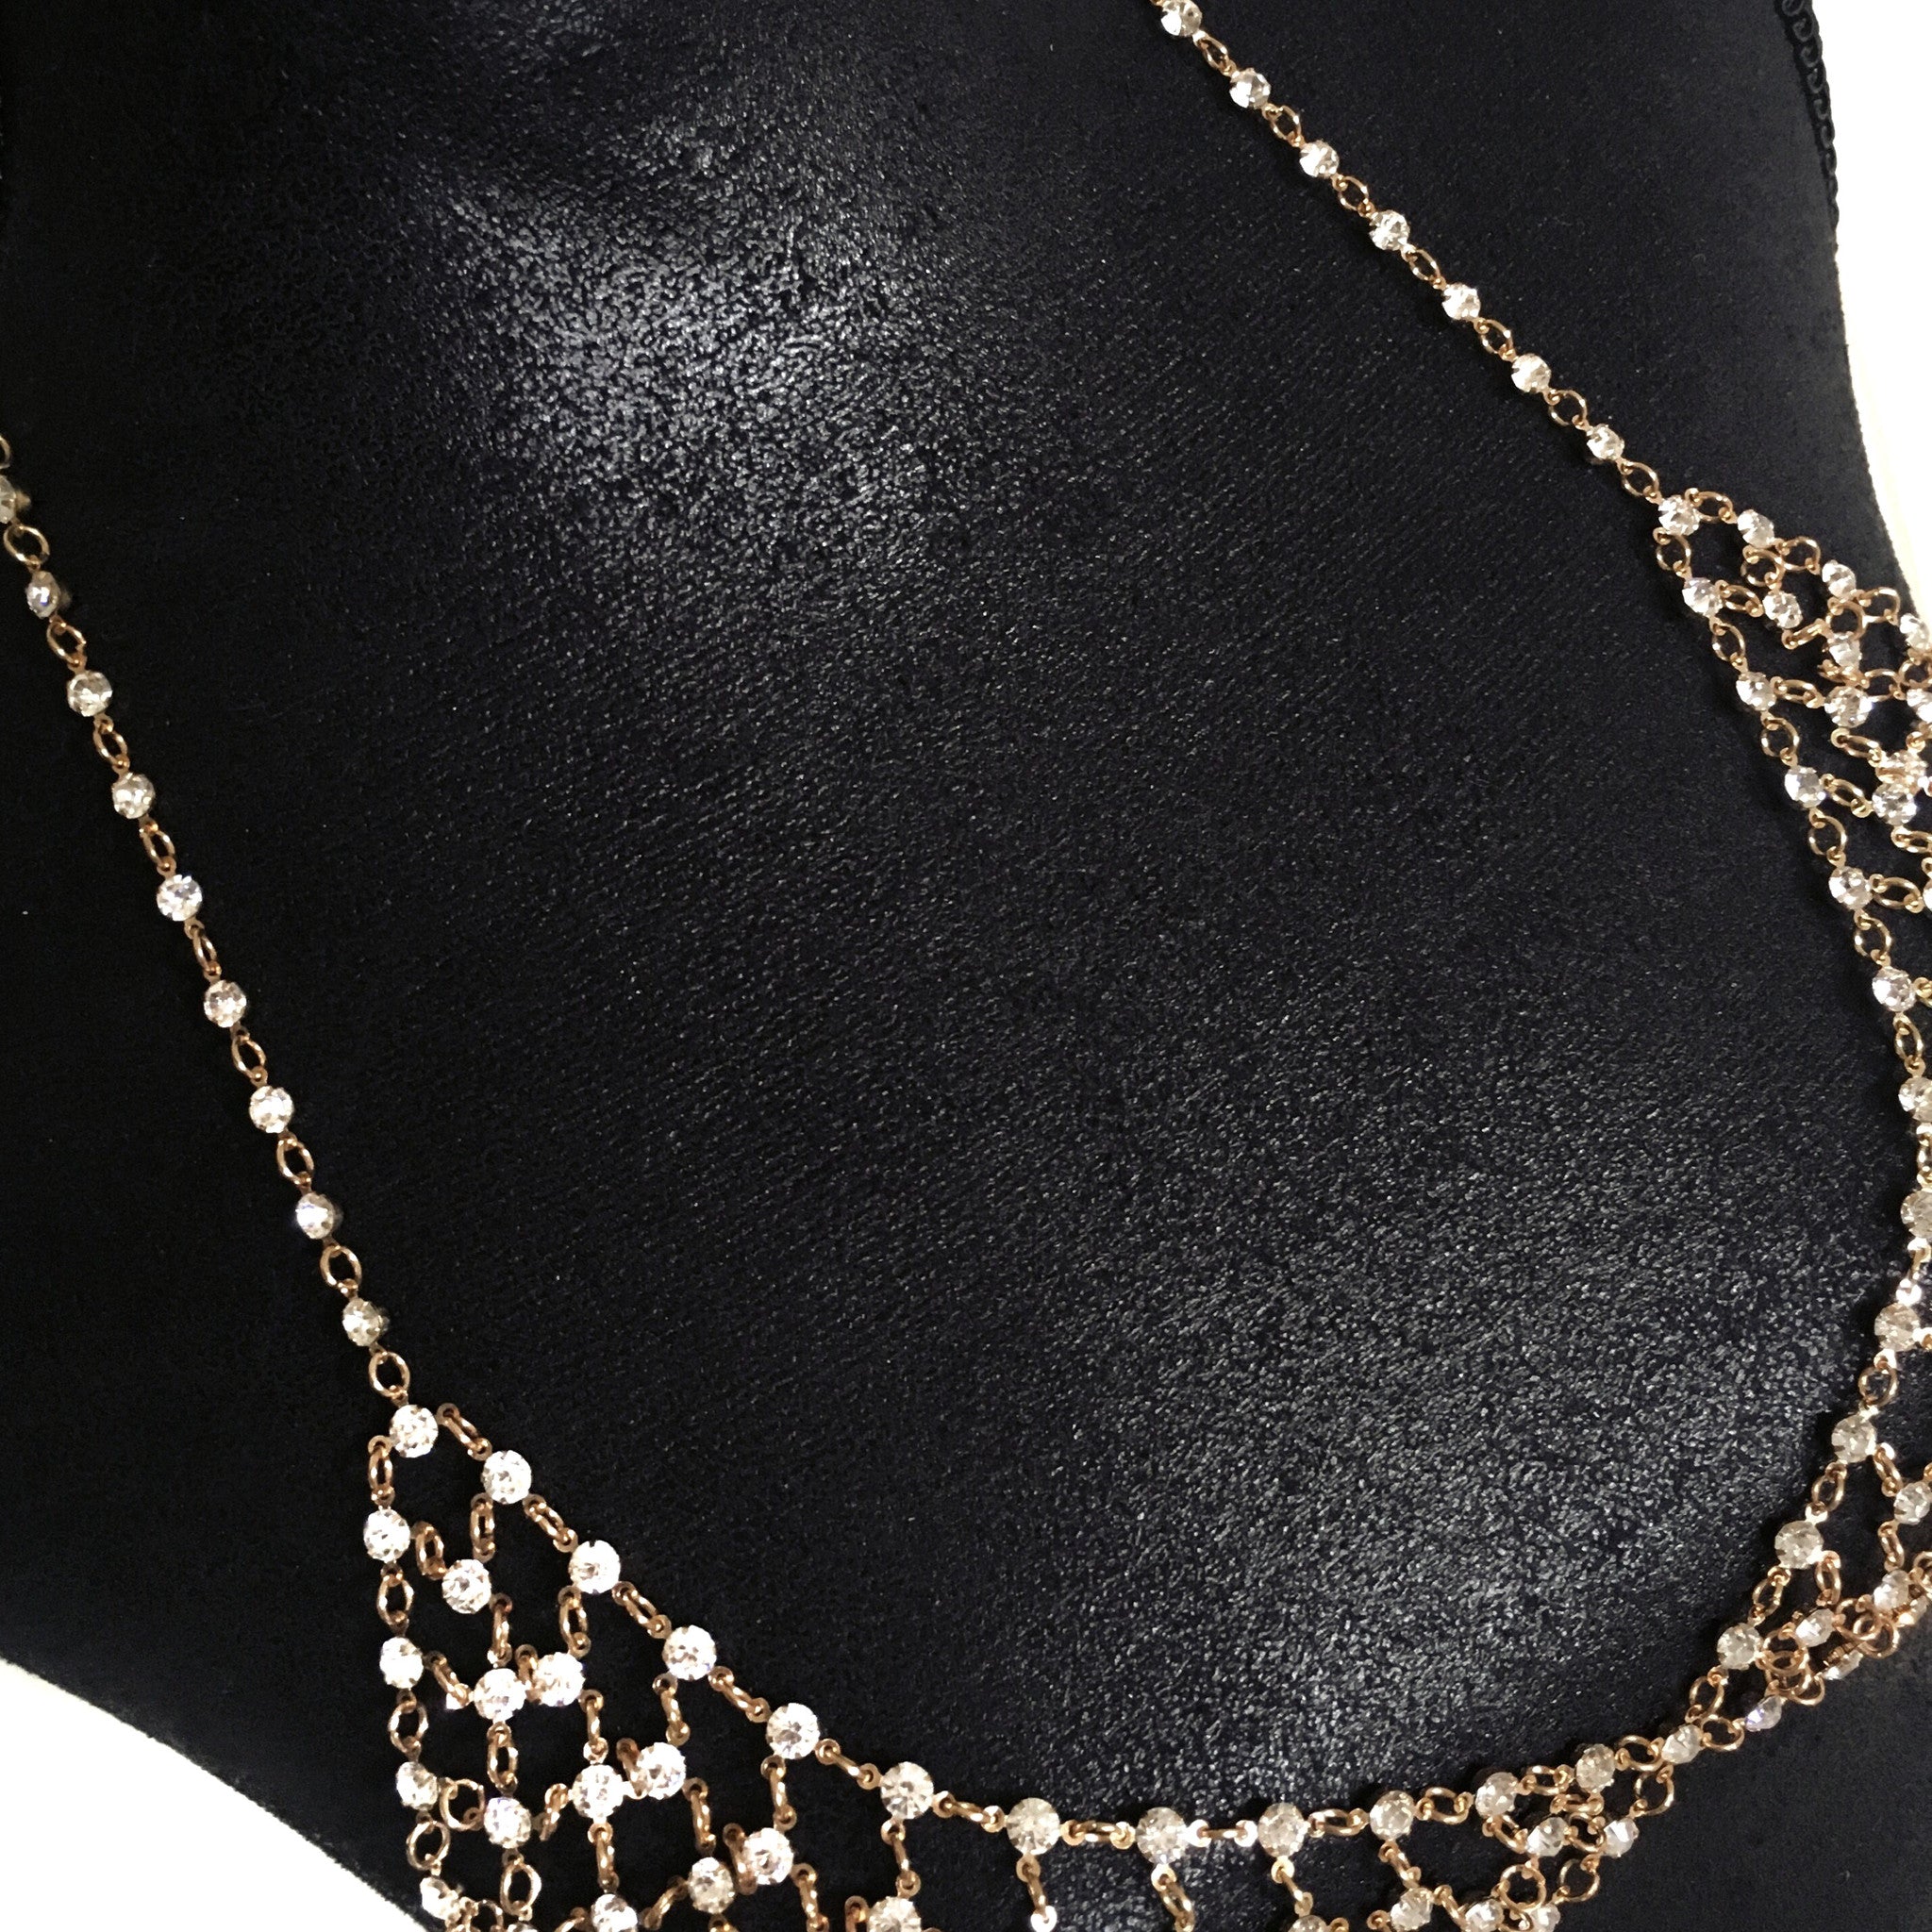 Rhinestone bra chain, Fashionsarah.com